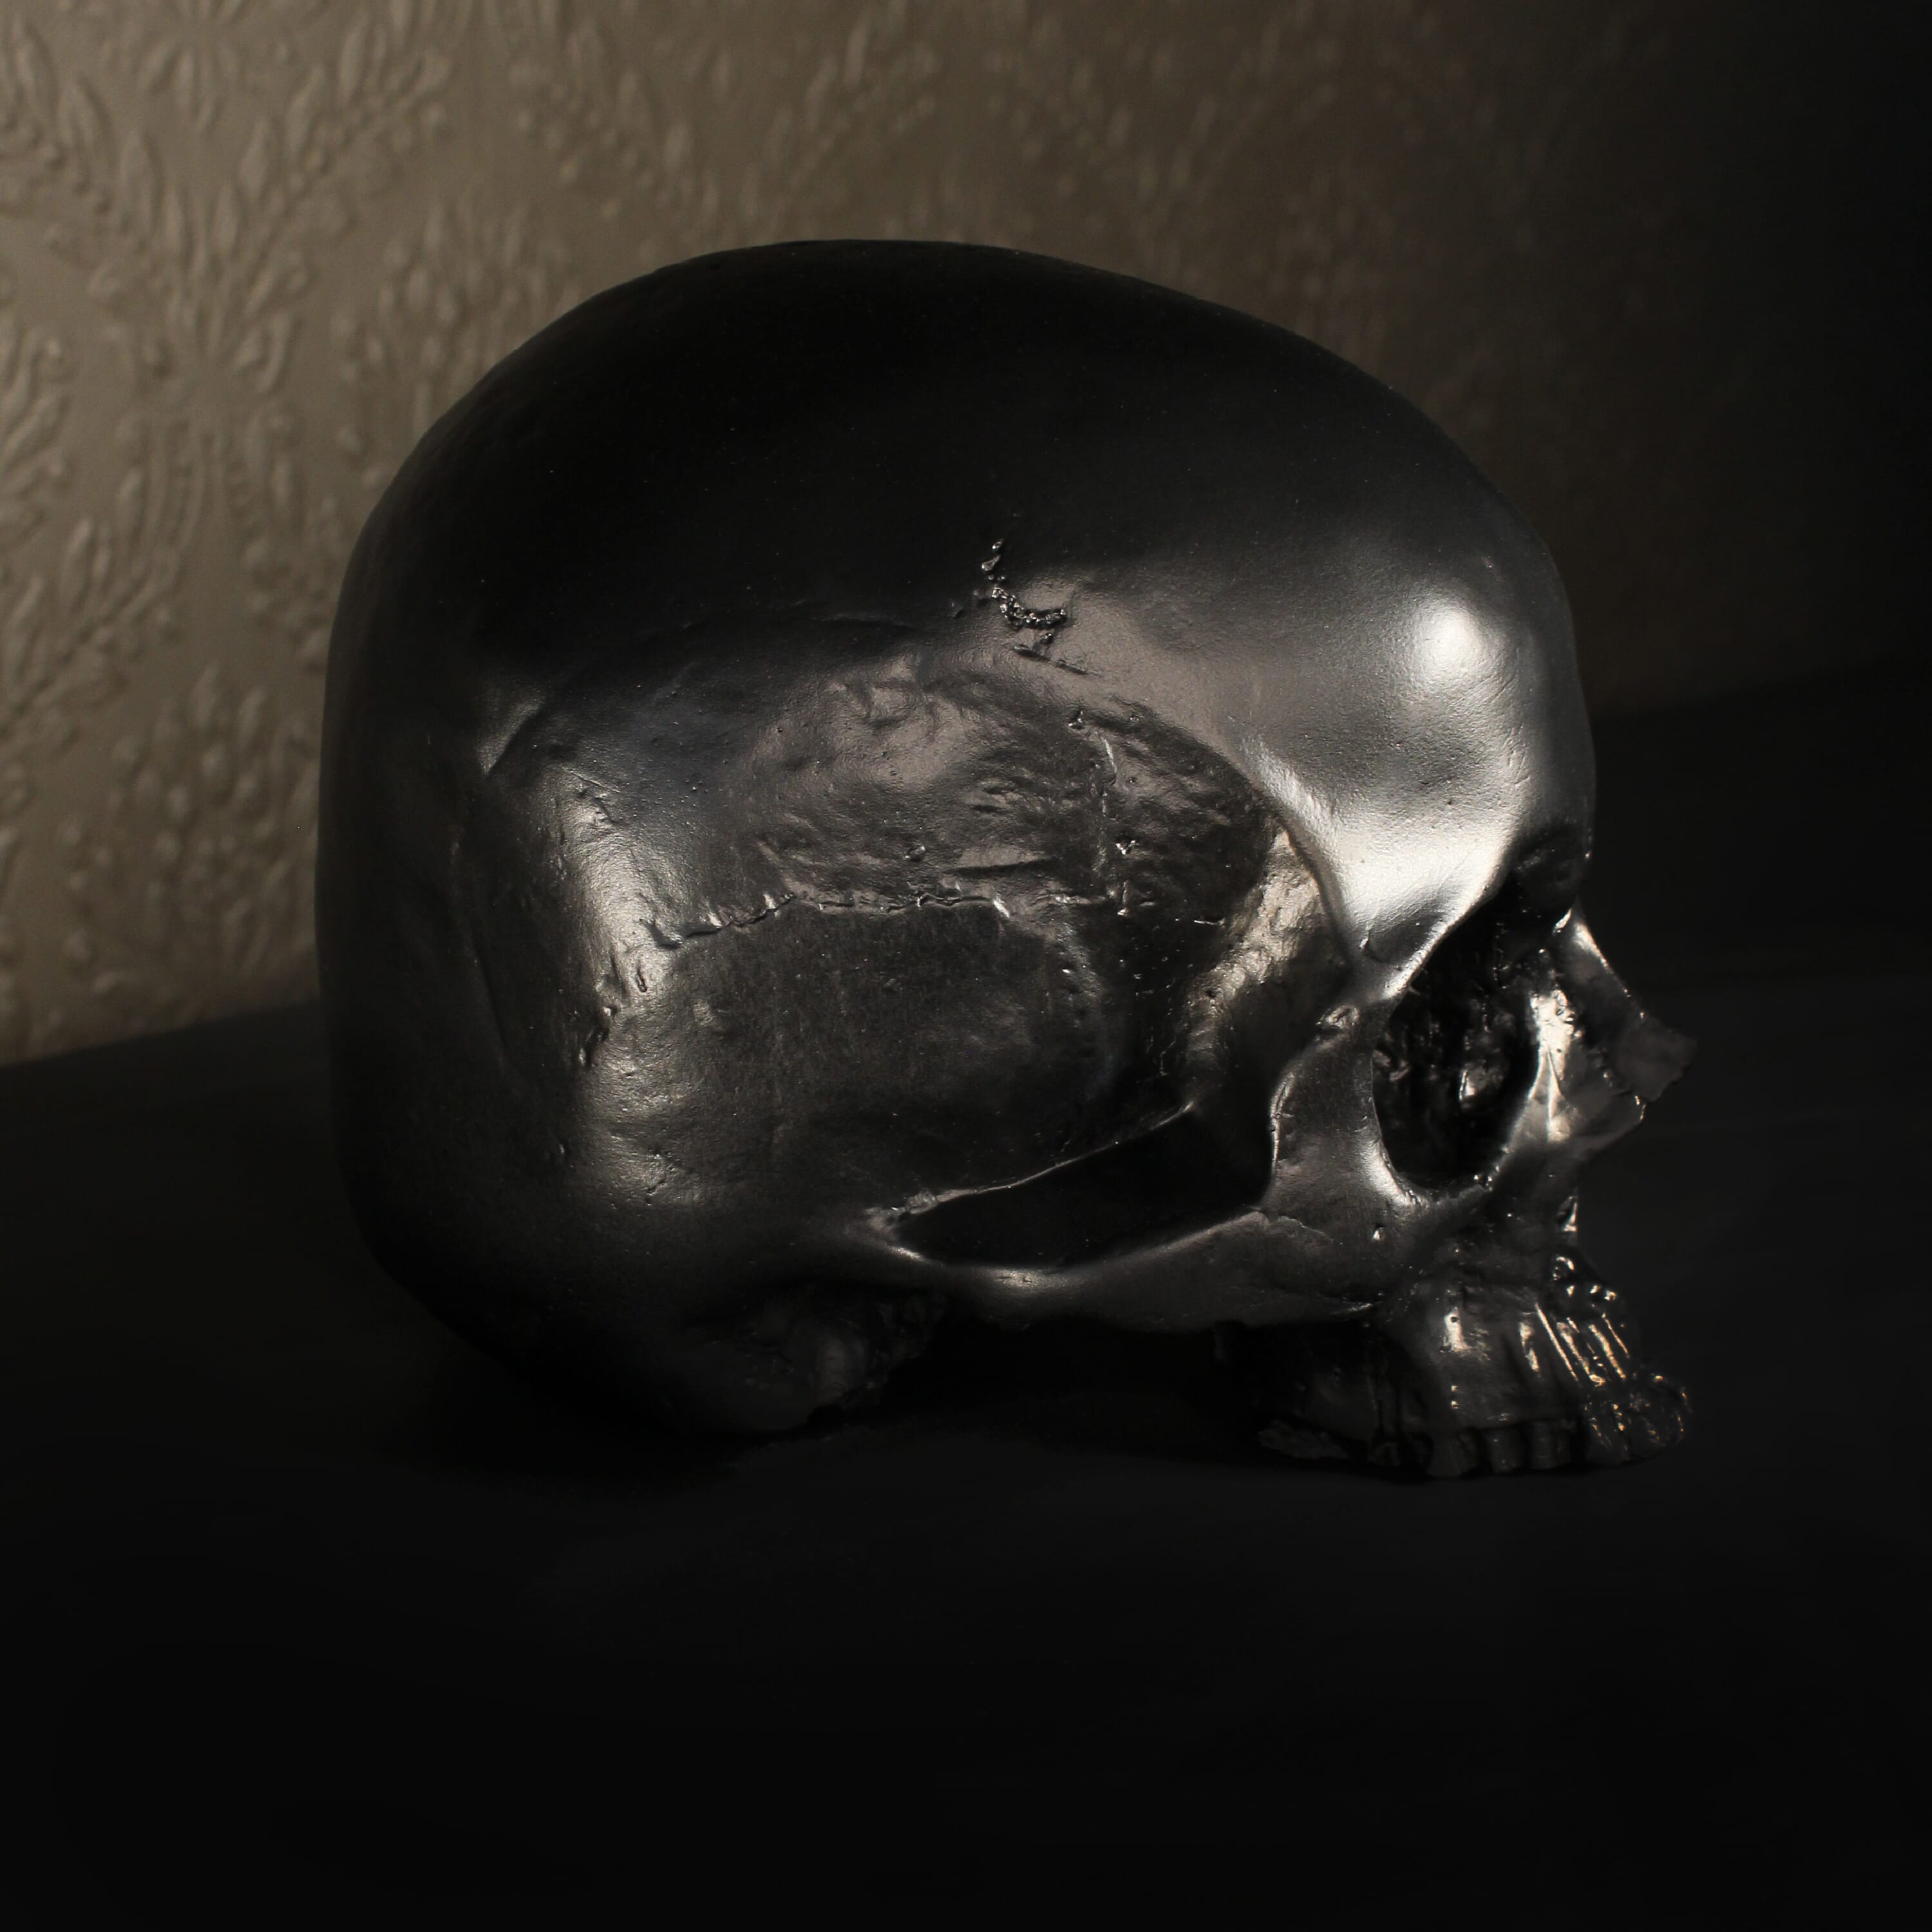 Replica Human Skull Ornament - Black